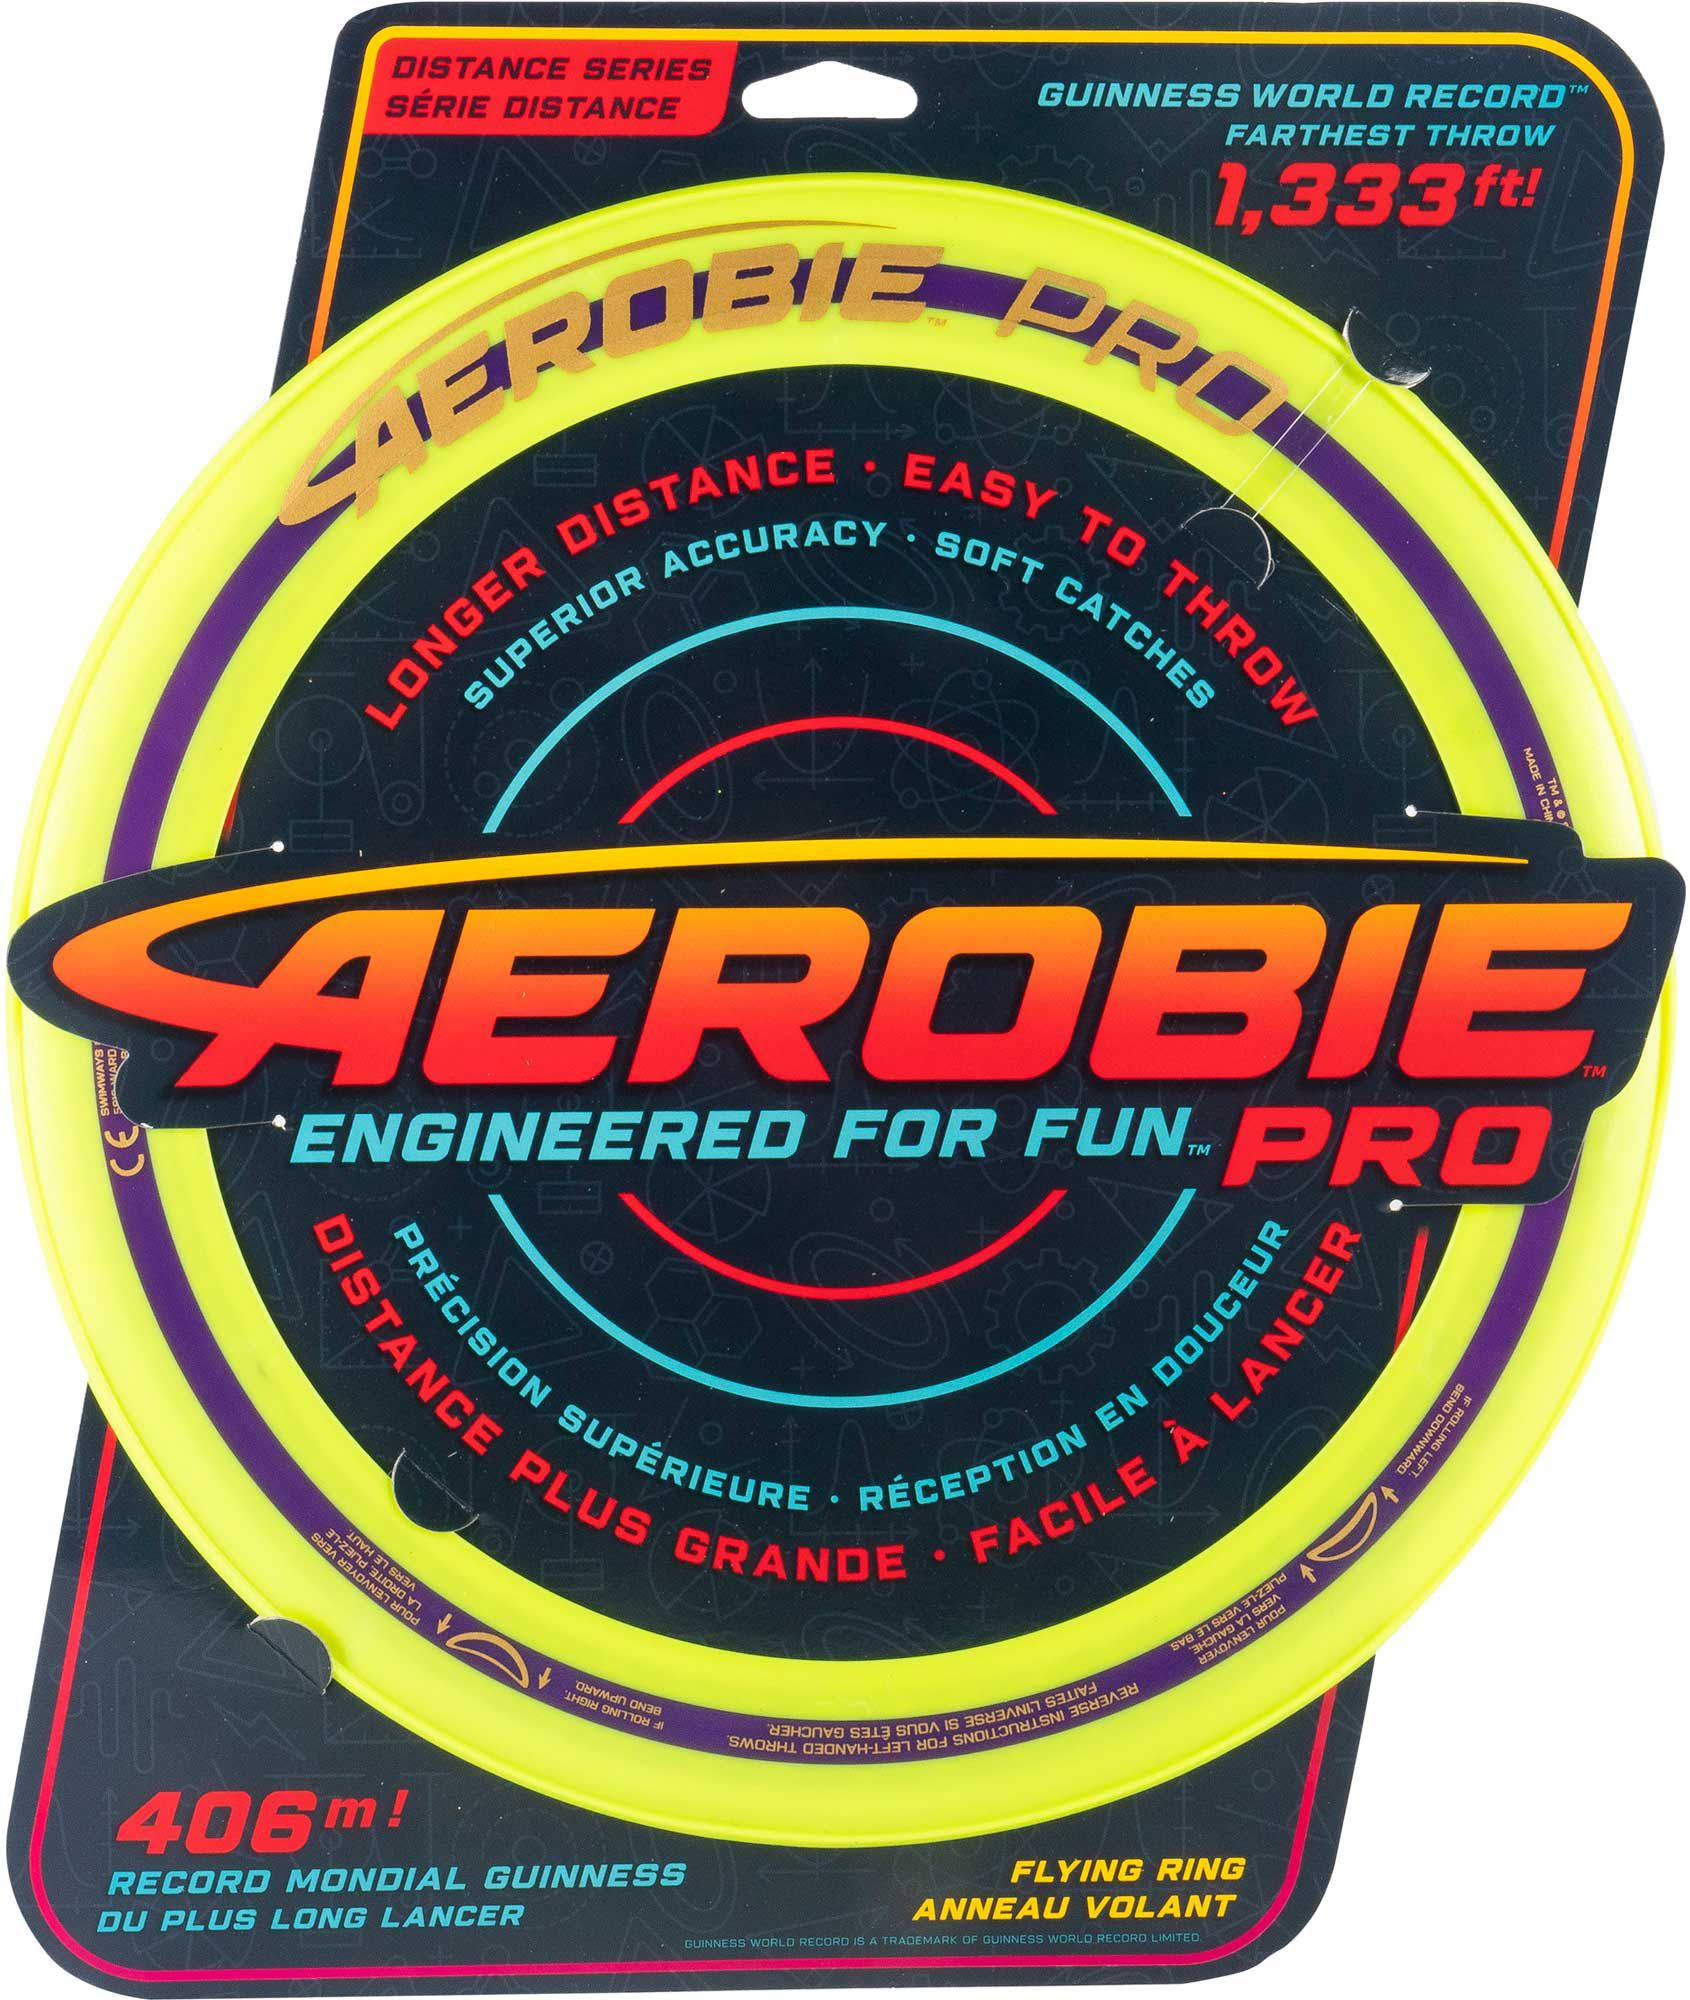 Aerobie Pro Flying Ring Flying Disc